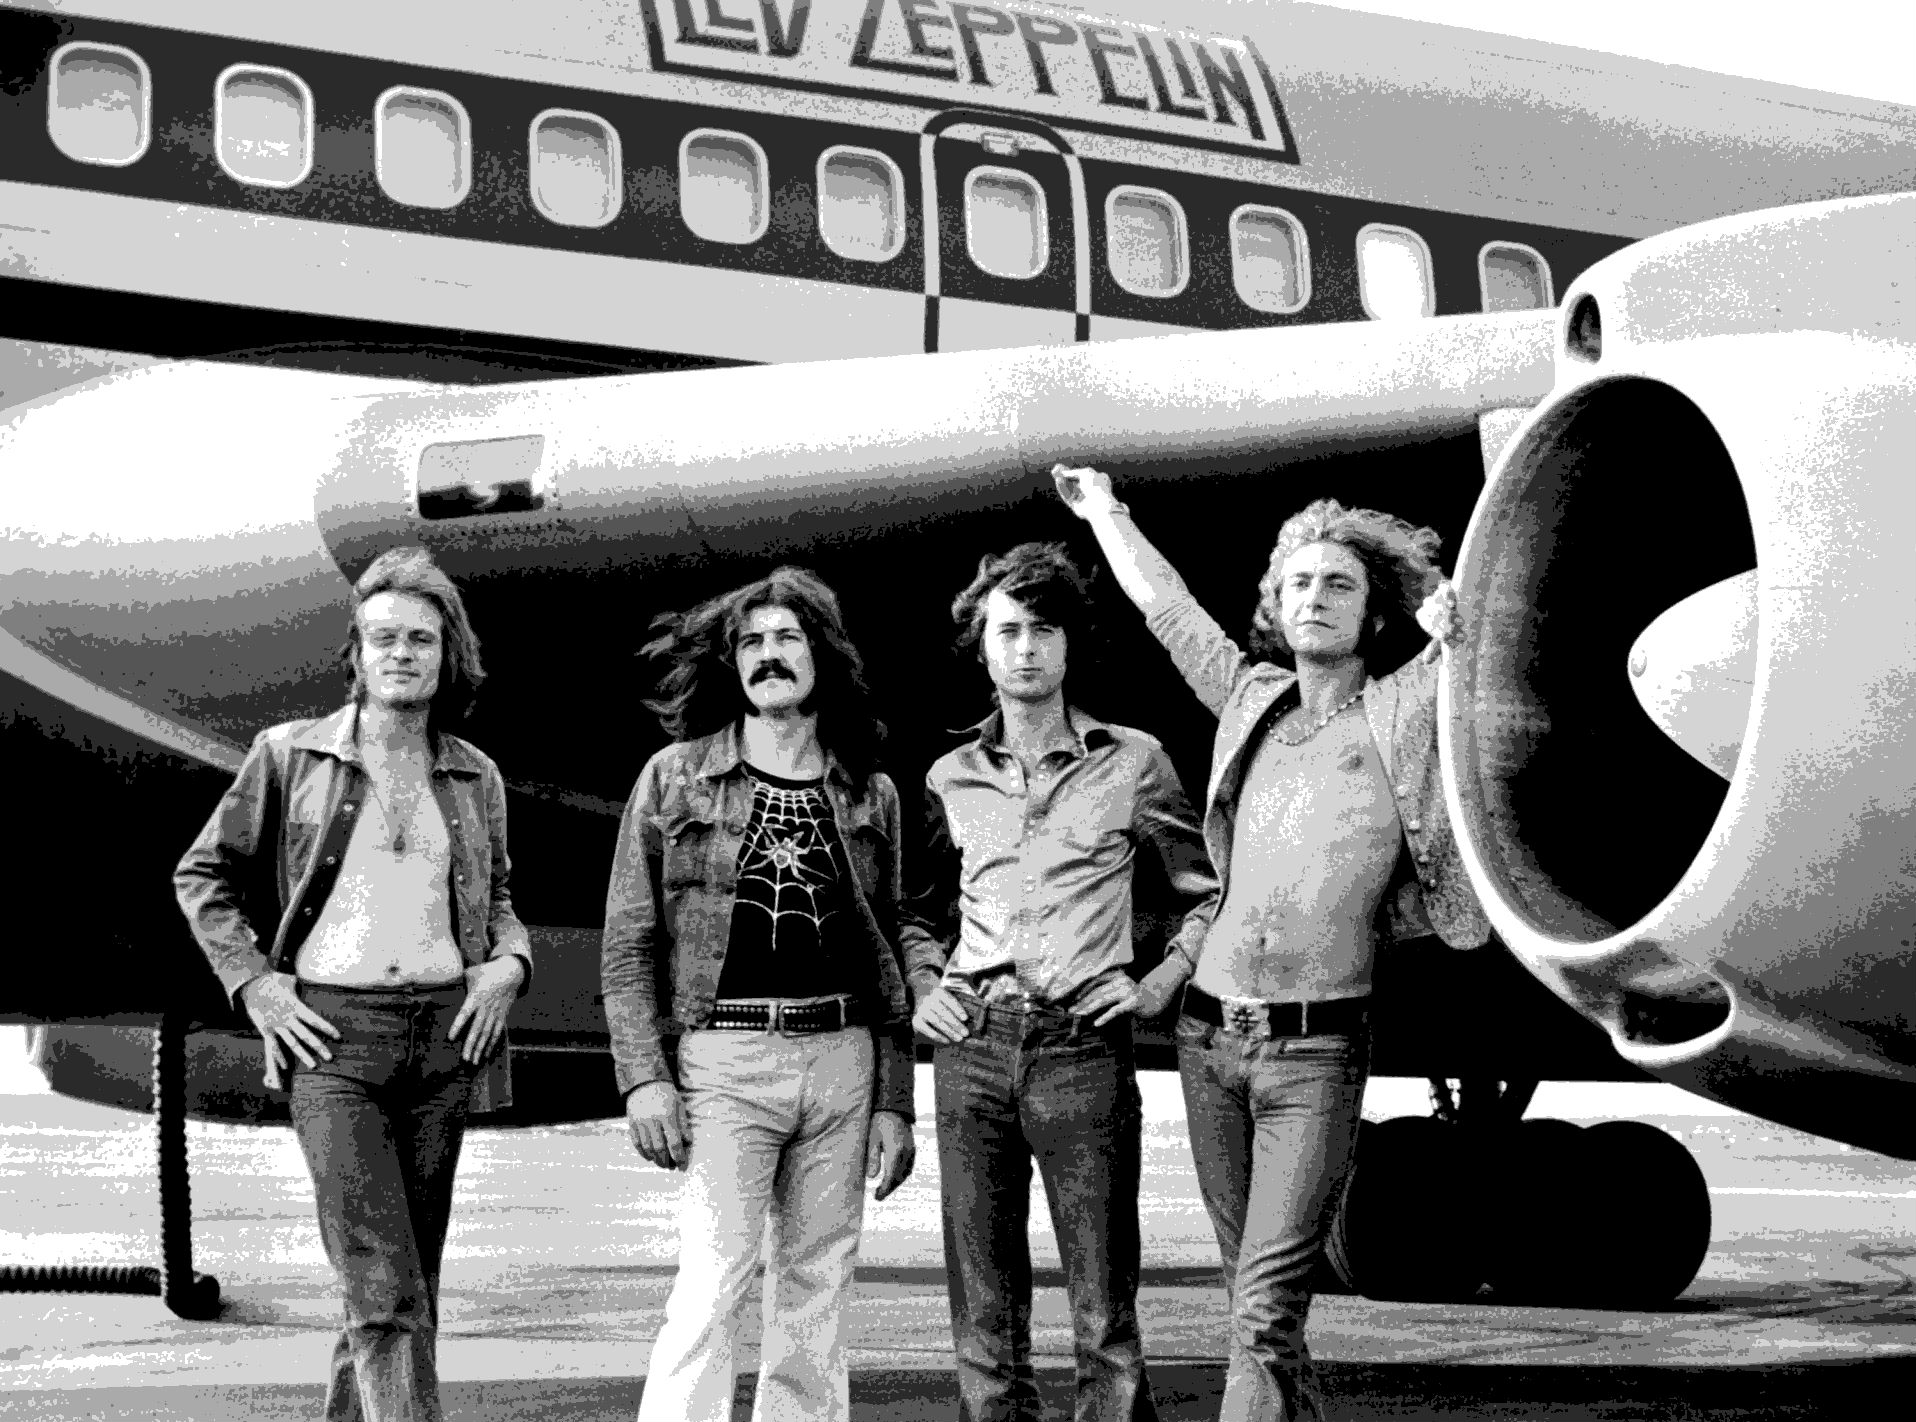 Led Zeppelin Wallpaper for PC | Full HD Pictures